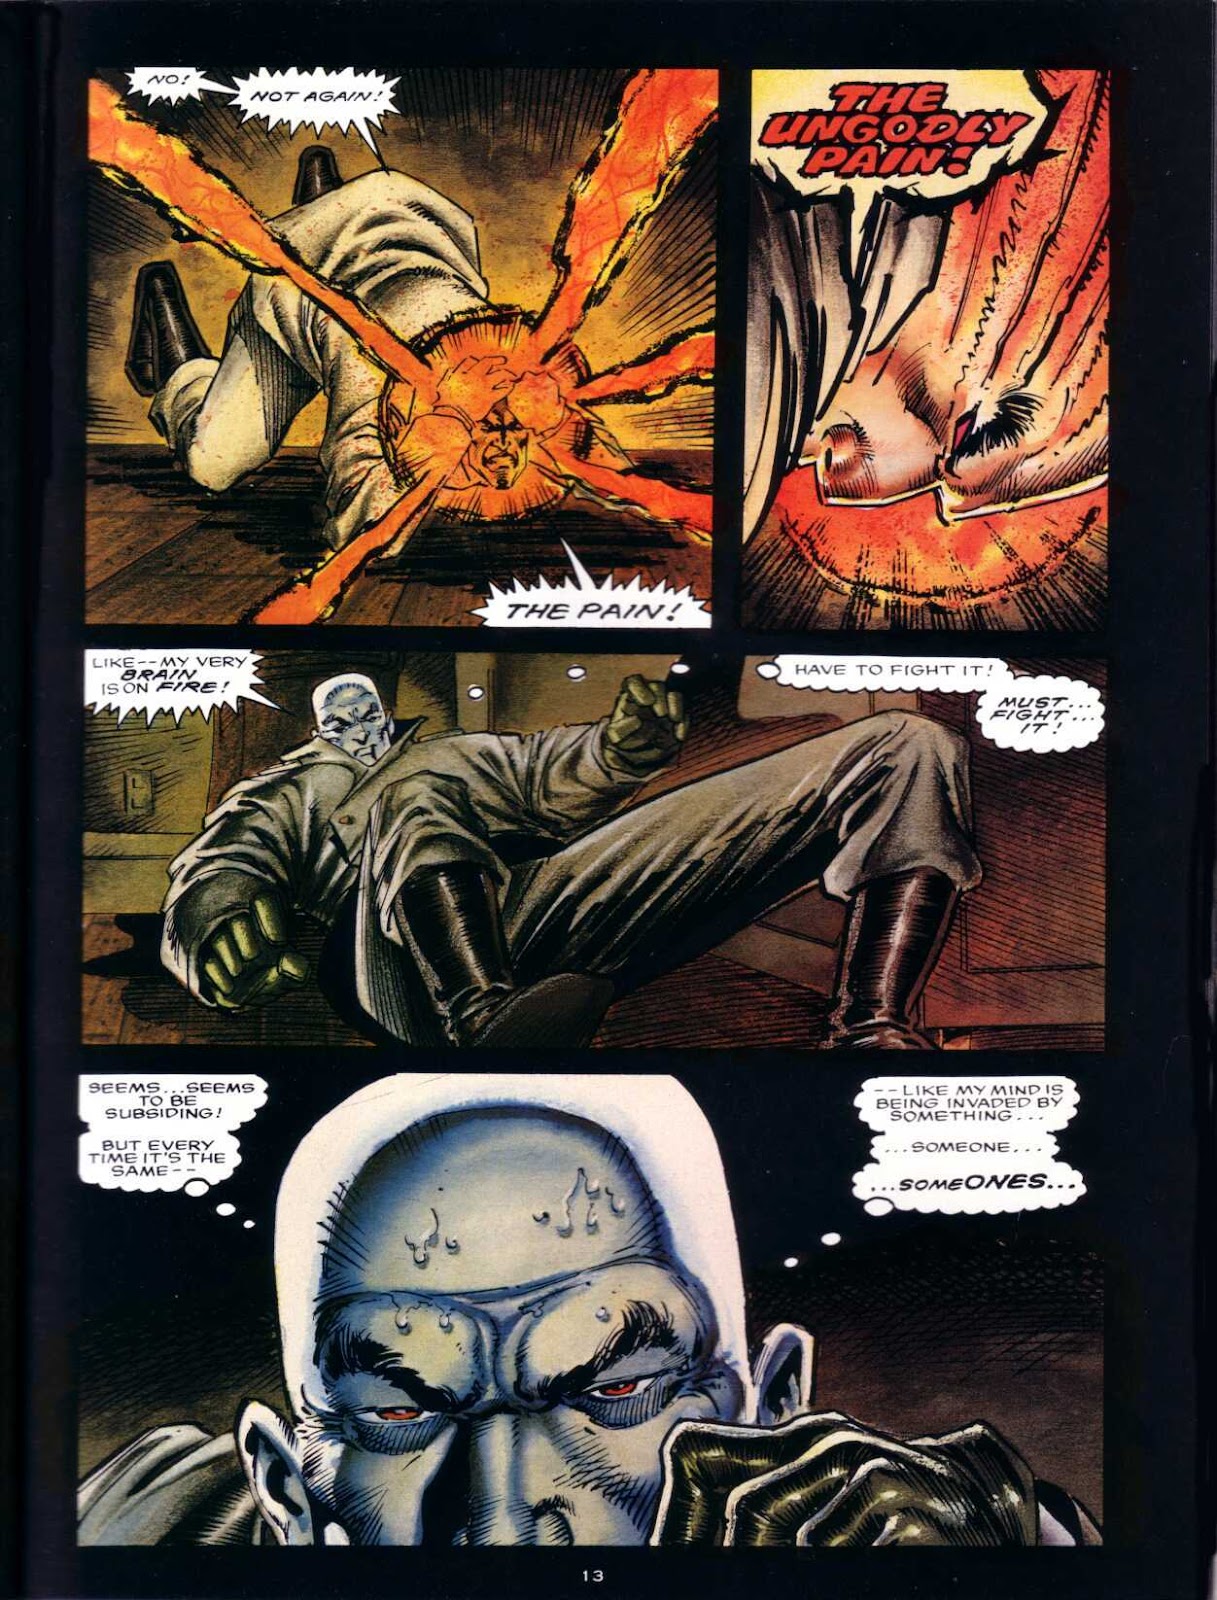 Marvel Graphic Novel issue 66 - Excalibur - Weird War III - Page 13